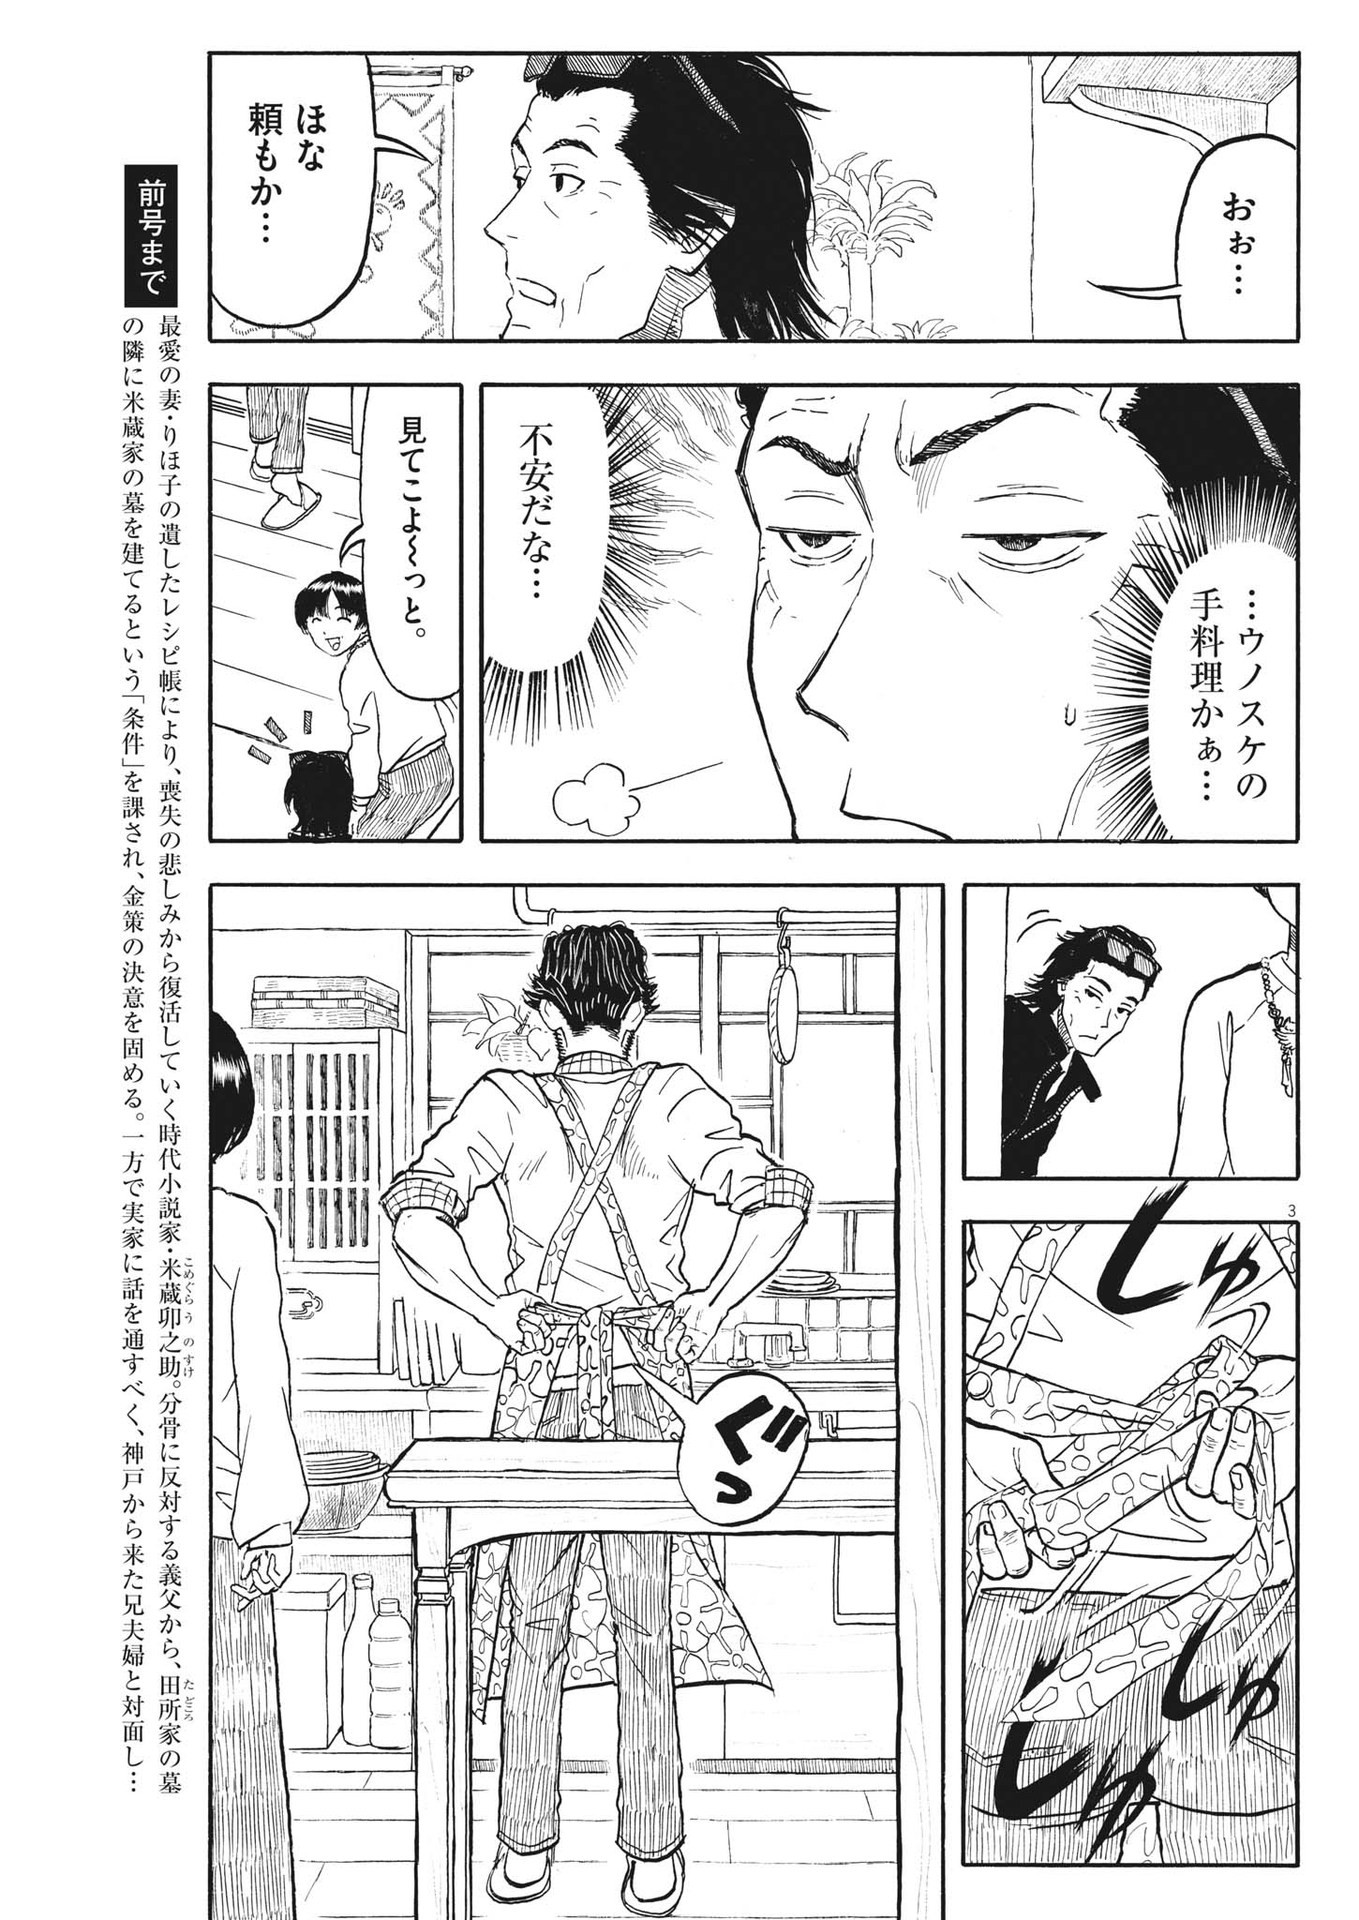 Komegura Fuufu no Recipe-chou - Chapter 32 - Page 3